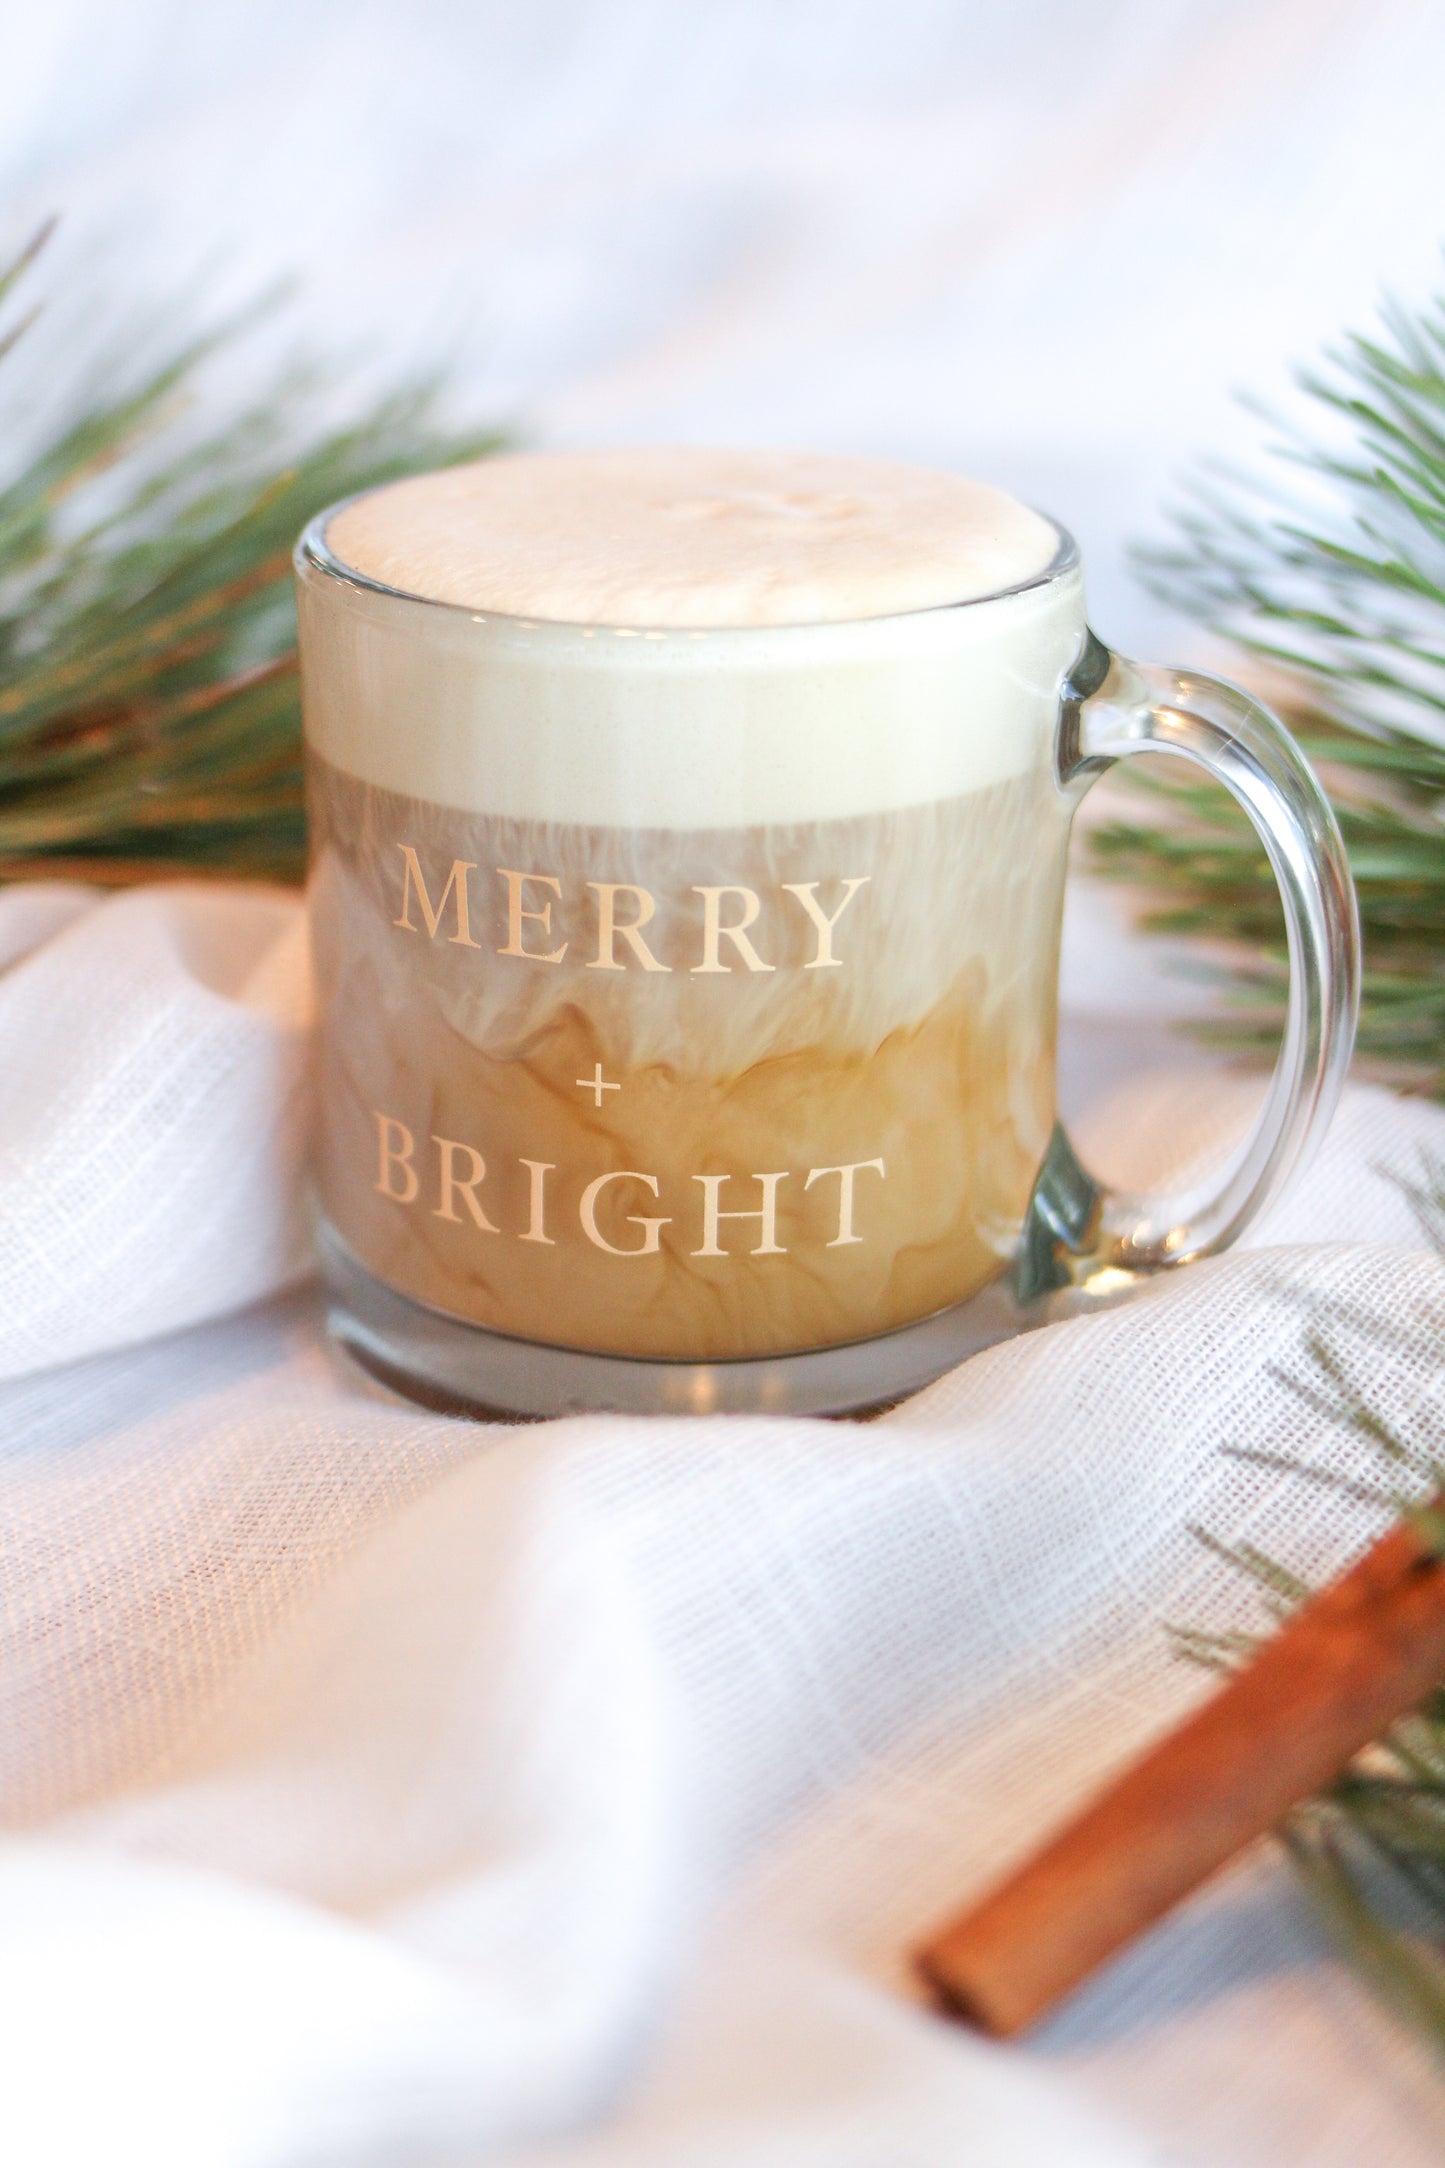 13 oz. Glass Mug | "Merry + Bright" Shimmering Gold Design